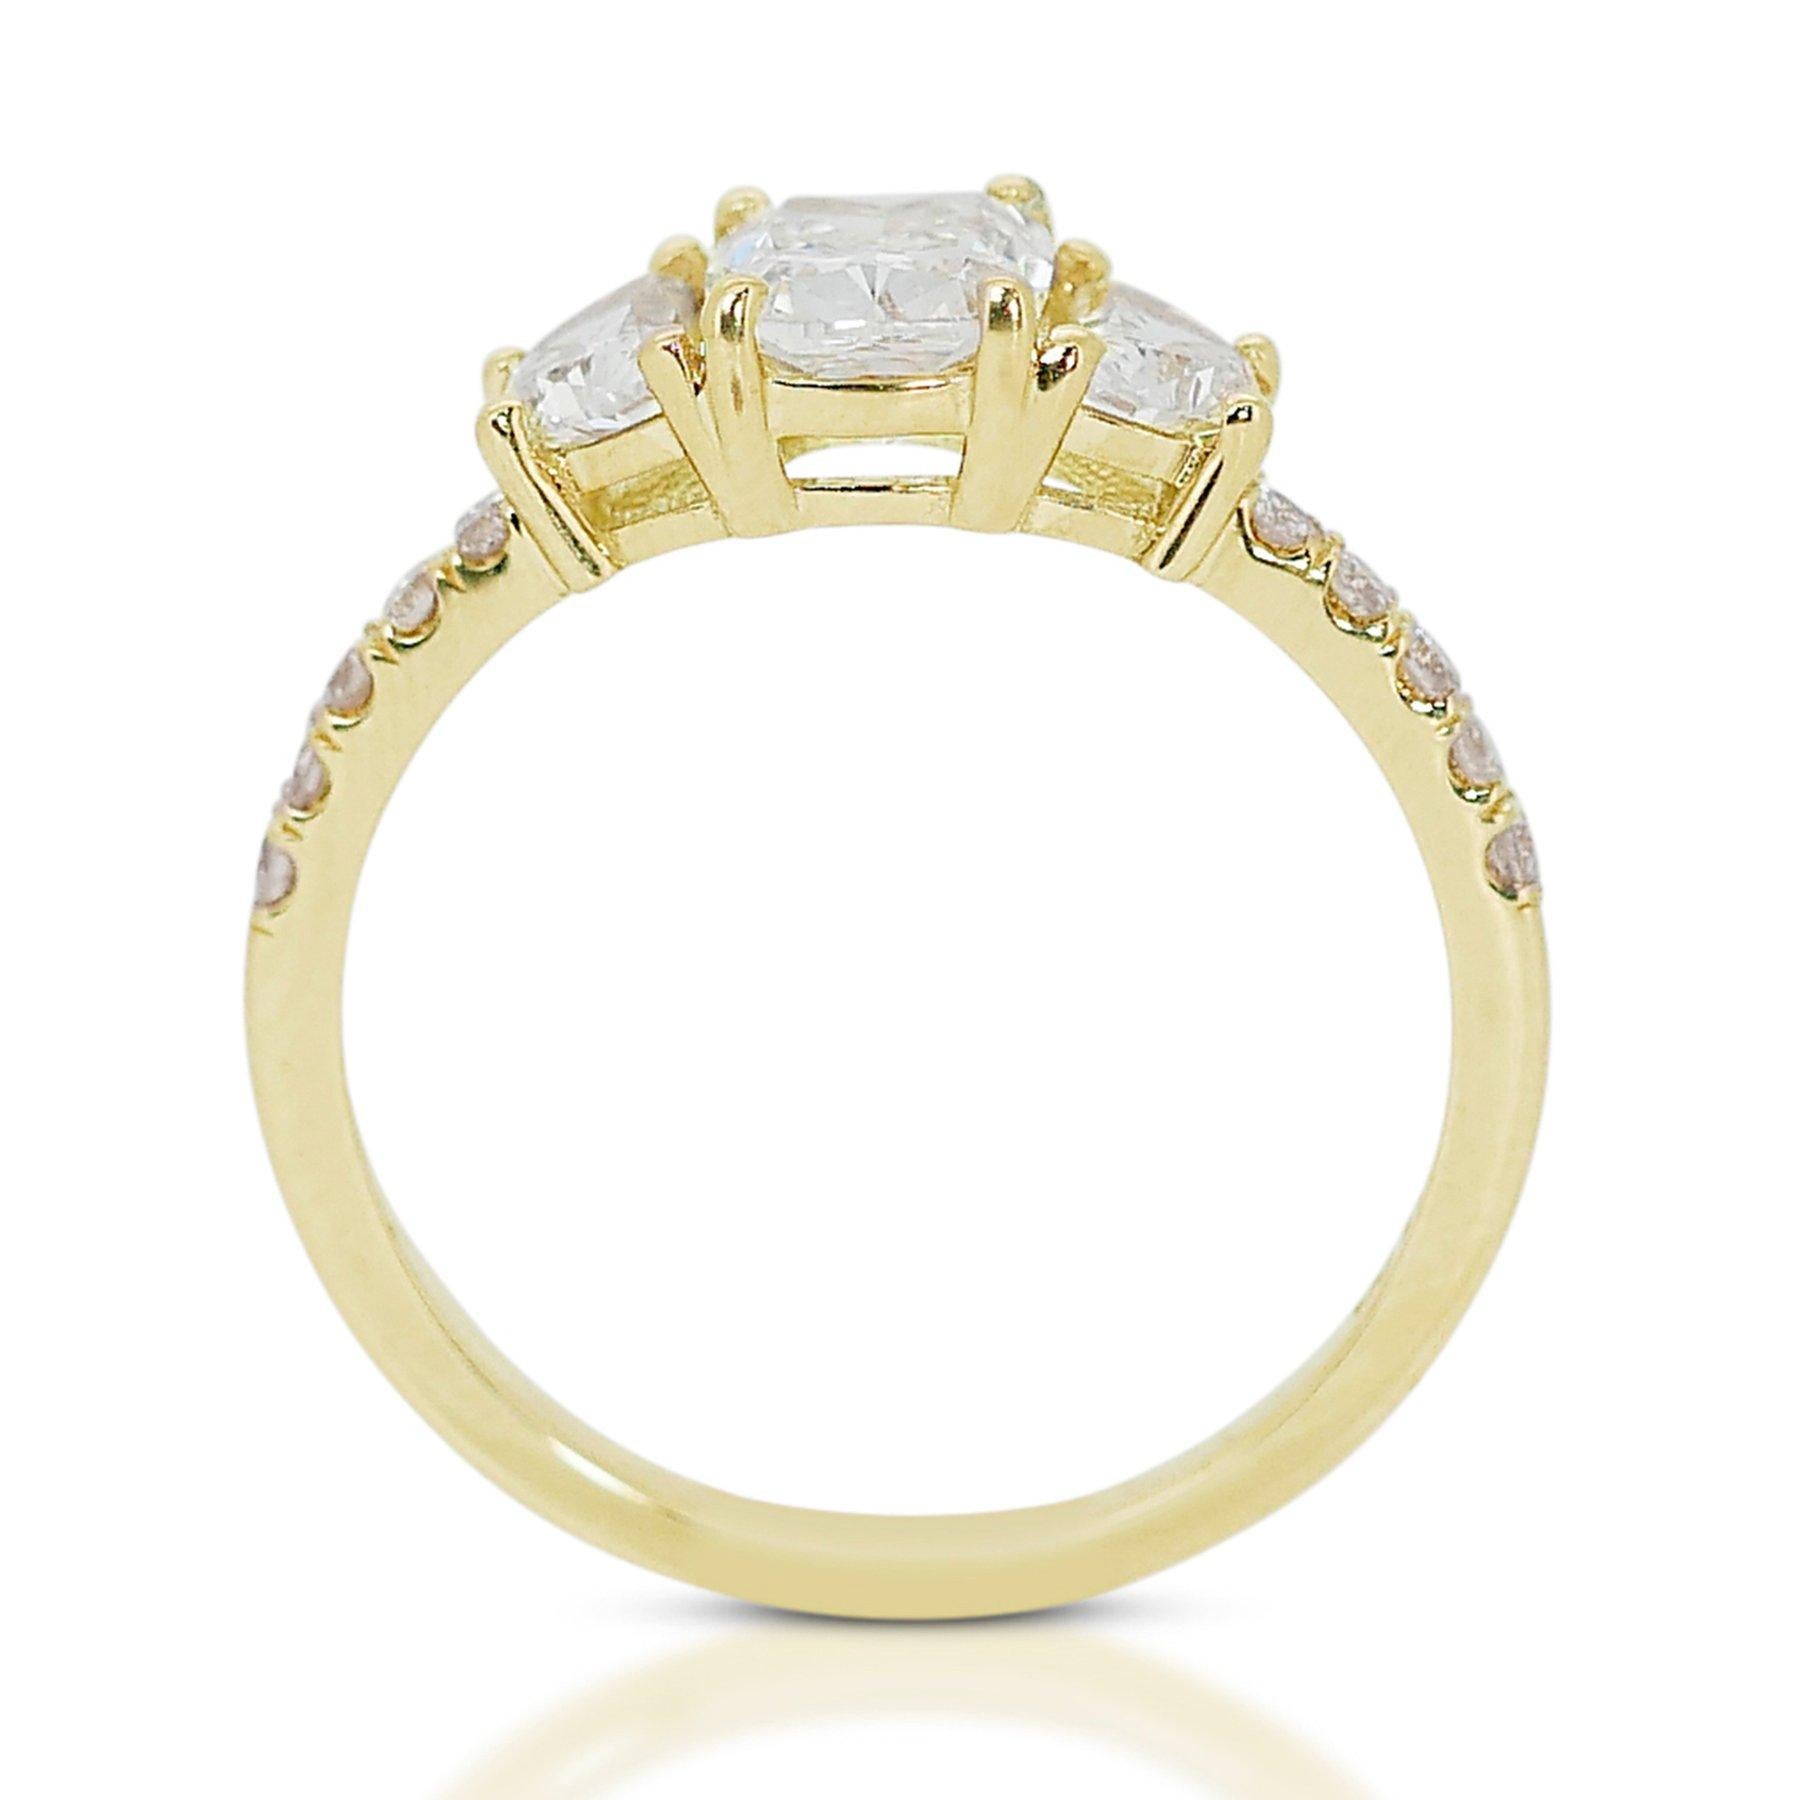 Shining 1.04 ct Cushion Cut Diamond 3 Stone Ring in 18k Yellow Gold – GIA  For Sale 2